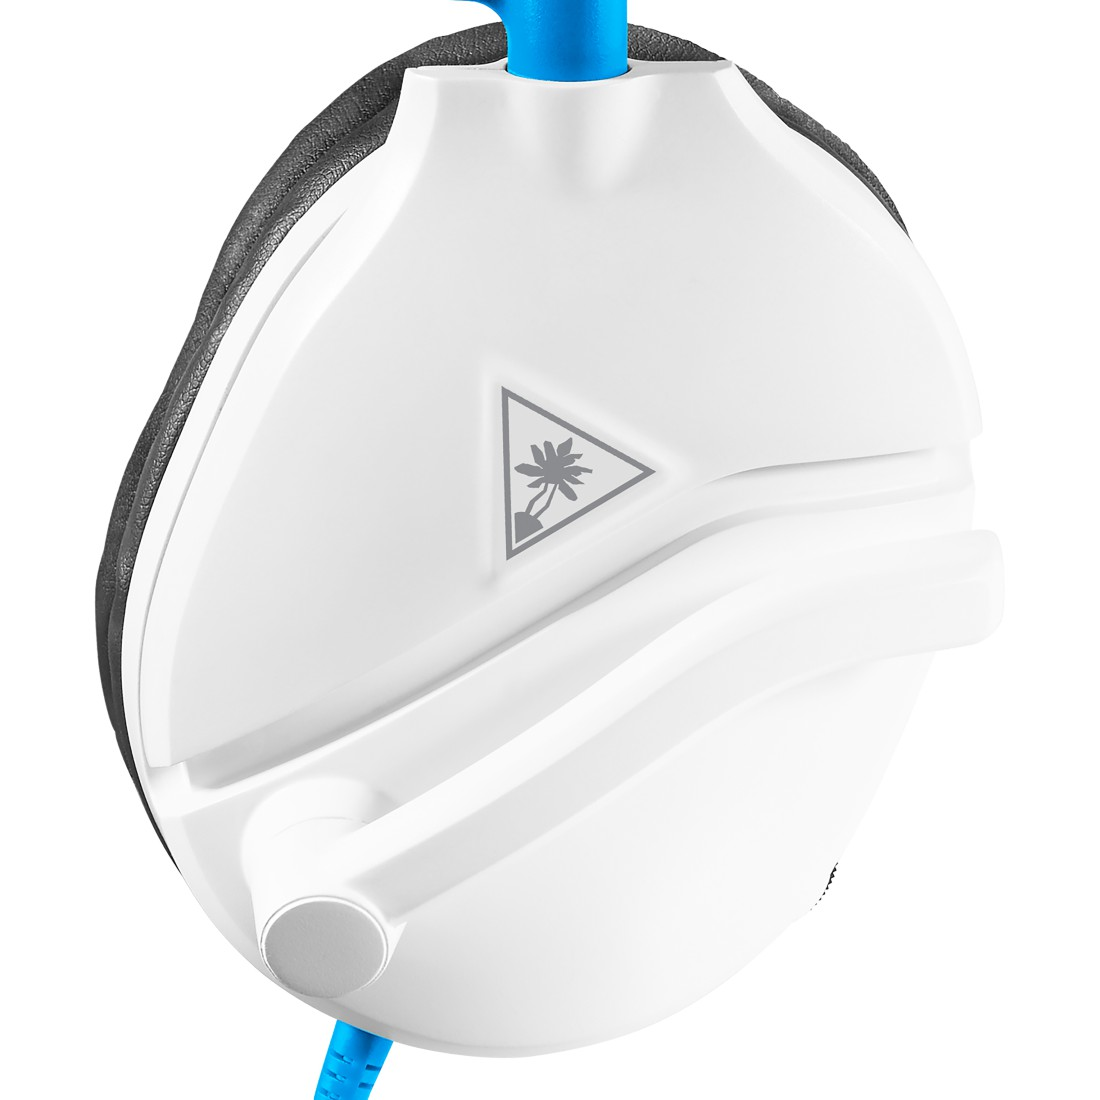 TURTLE BEACH Recon 70, Over-ear Gaming Headset Weiß/Blau